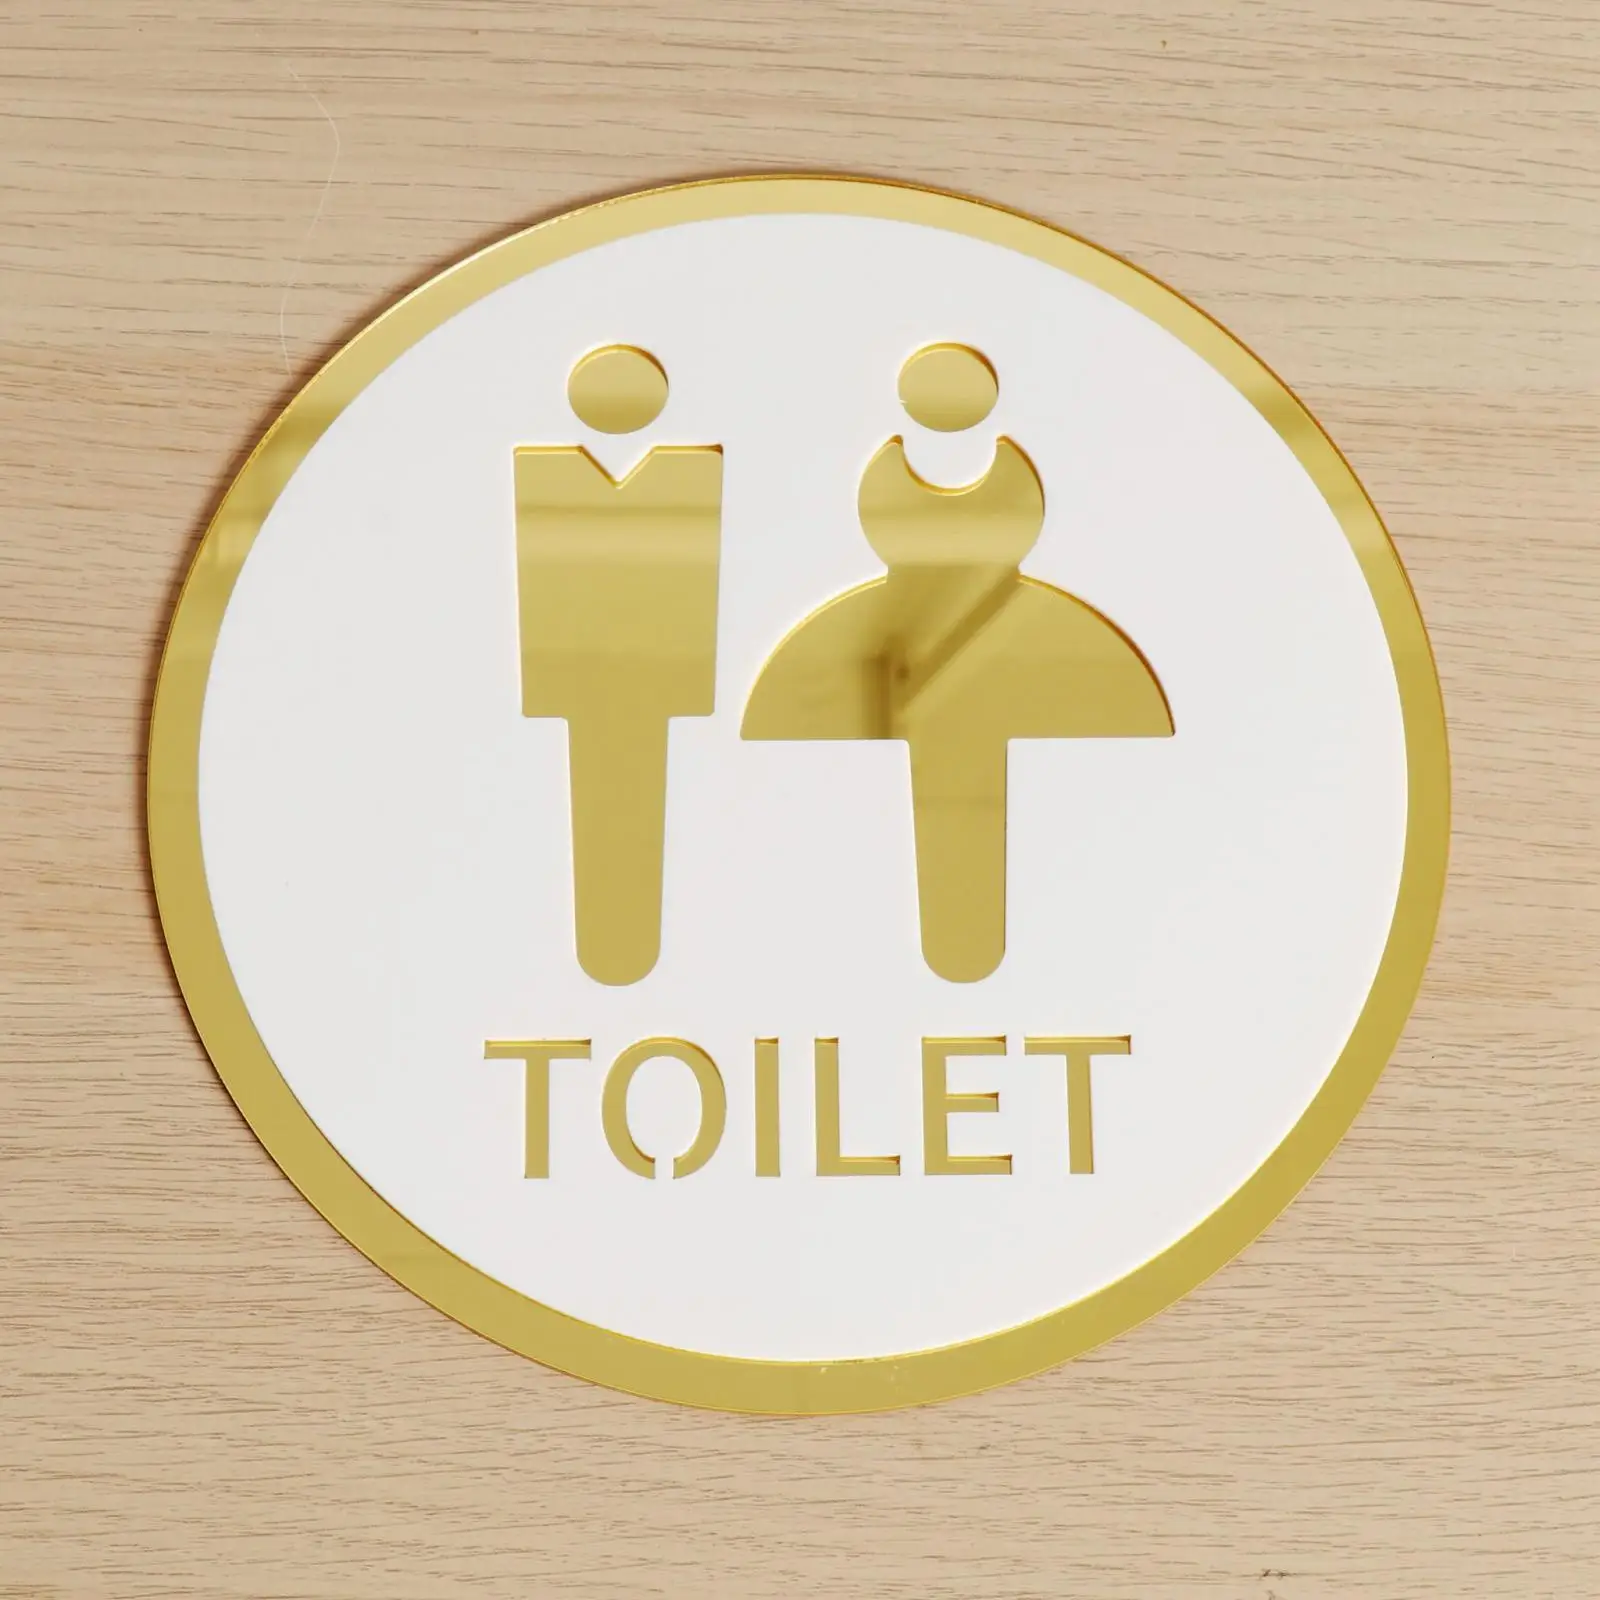 Hollow Toilet Door Sign Restroom Sign, Bathroom Door Signage, Bathroom Sign Symbols for Offices, Shopping Centers